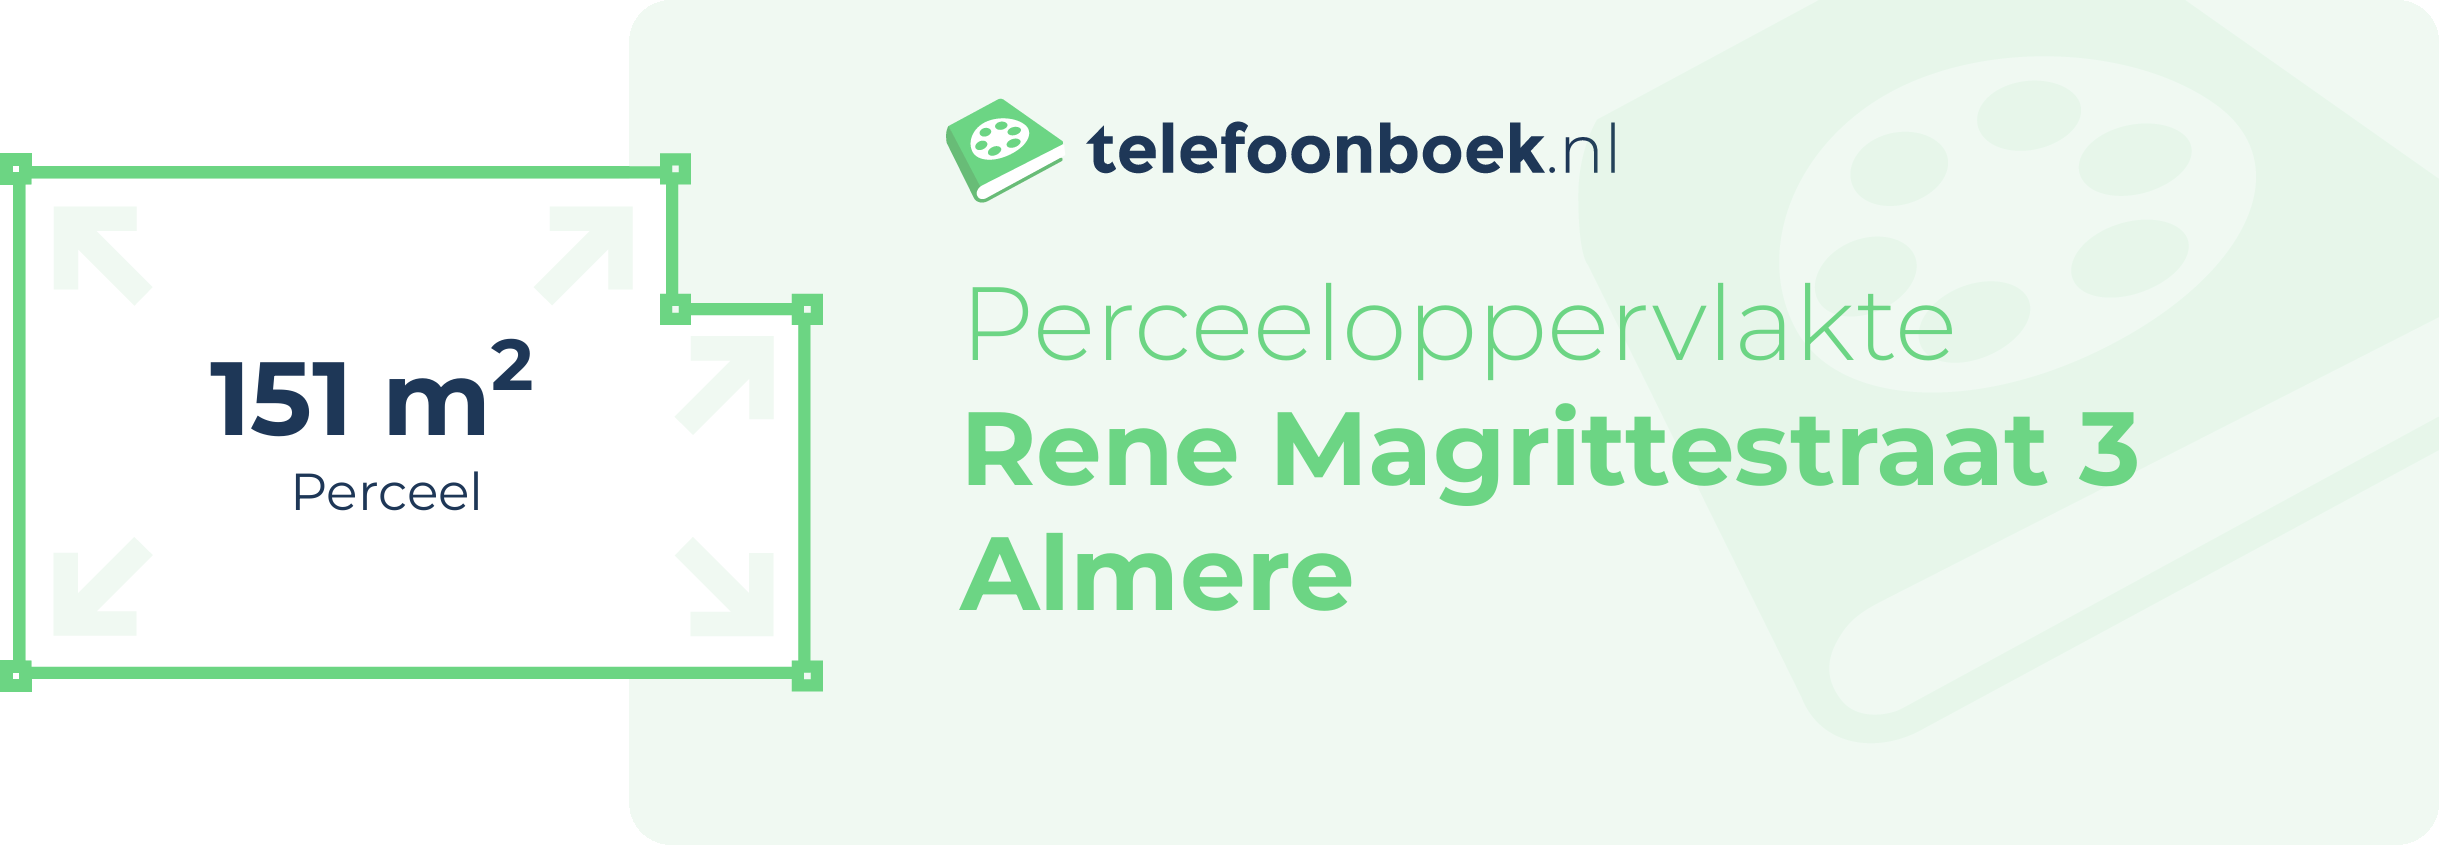 Perceeloppervlakte Rene Magrittestraat 3 Almere